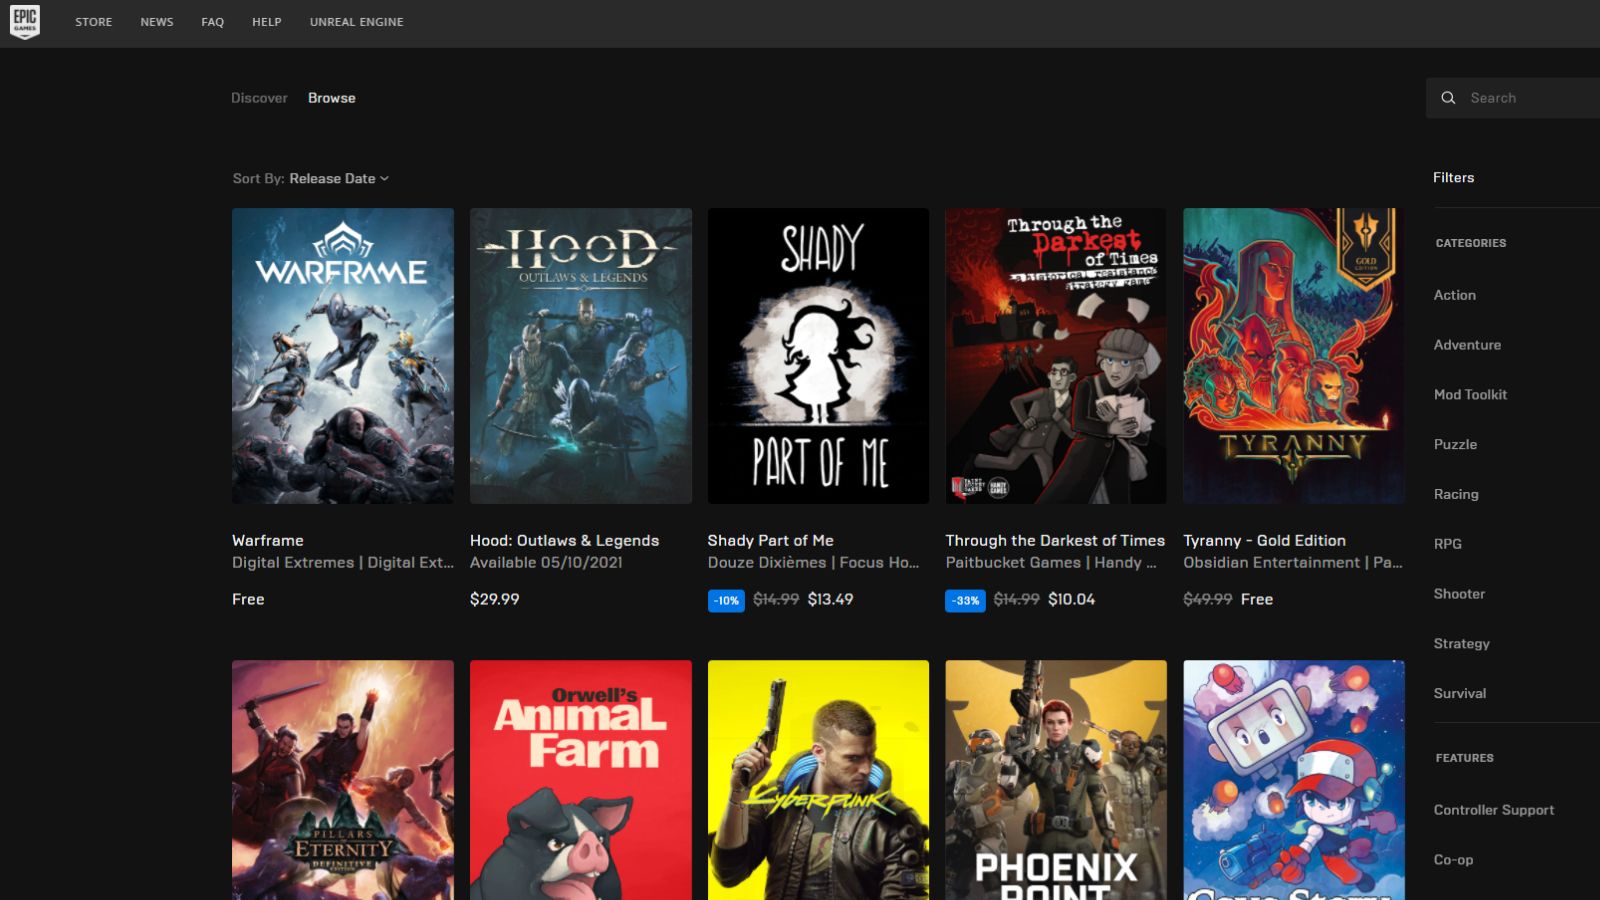 Screenshot of Epic Games Store browsing page